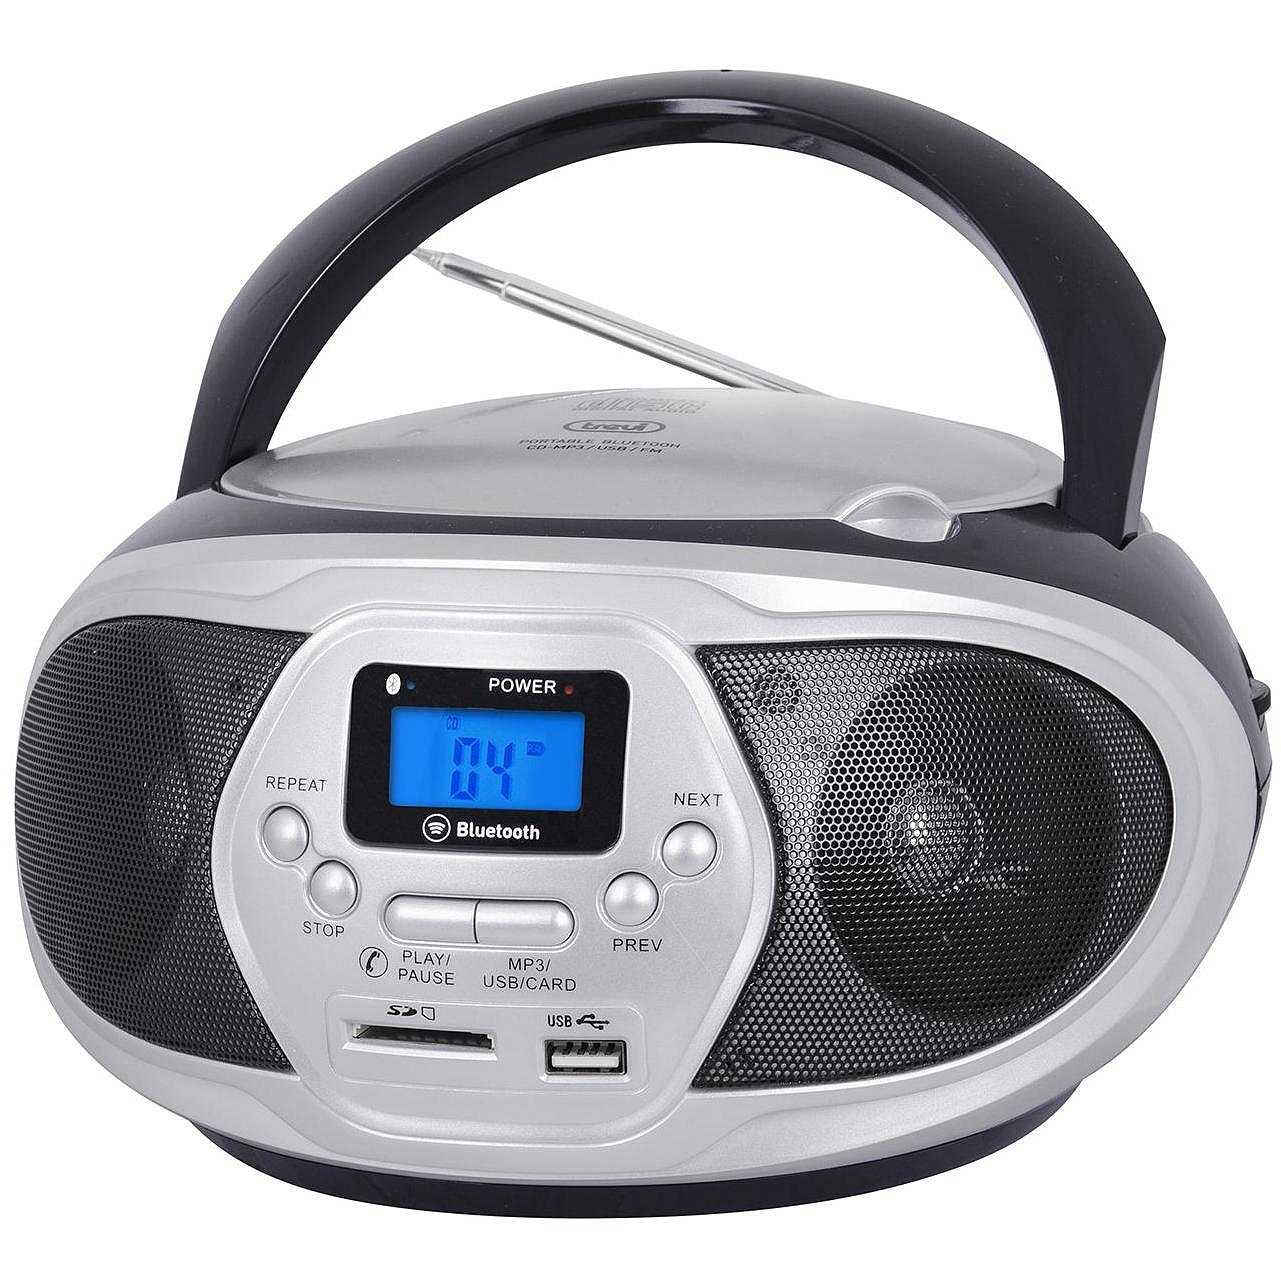 Trevi - Stereo Portatile Boombox CD con Radio DAB/DAB+ Bluetooth